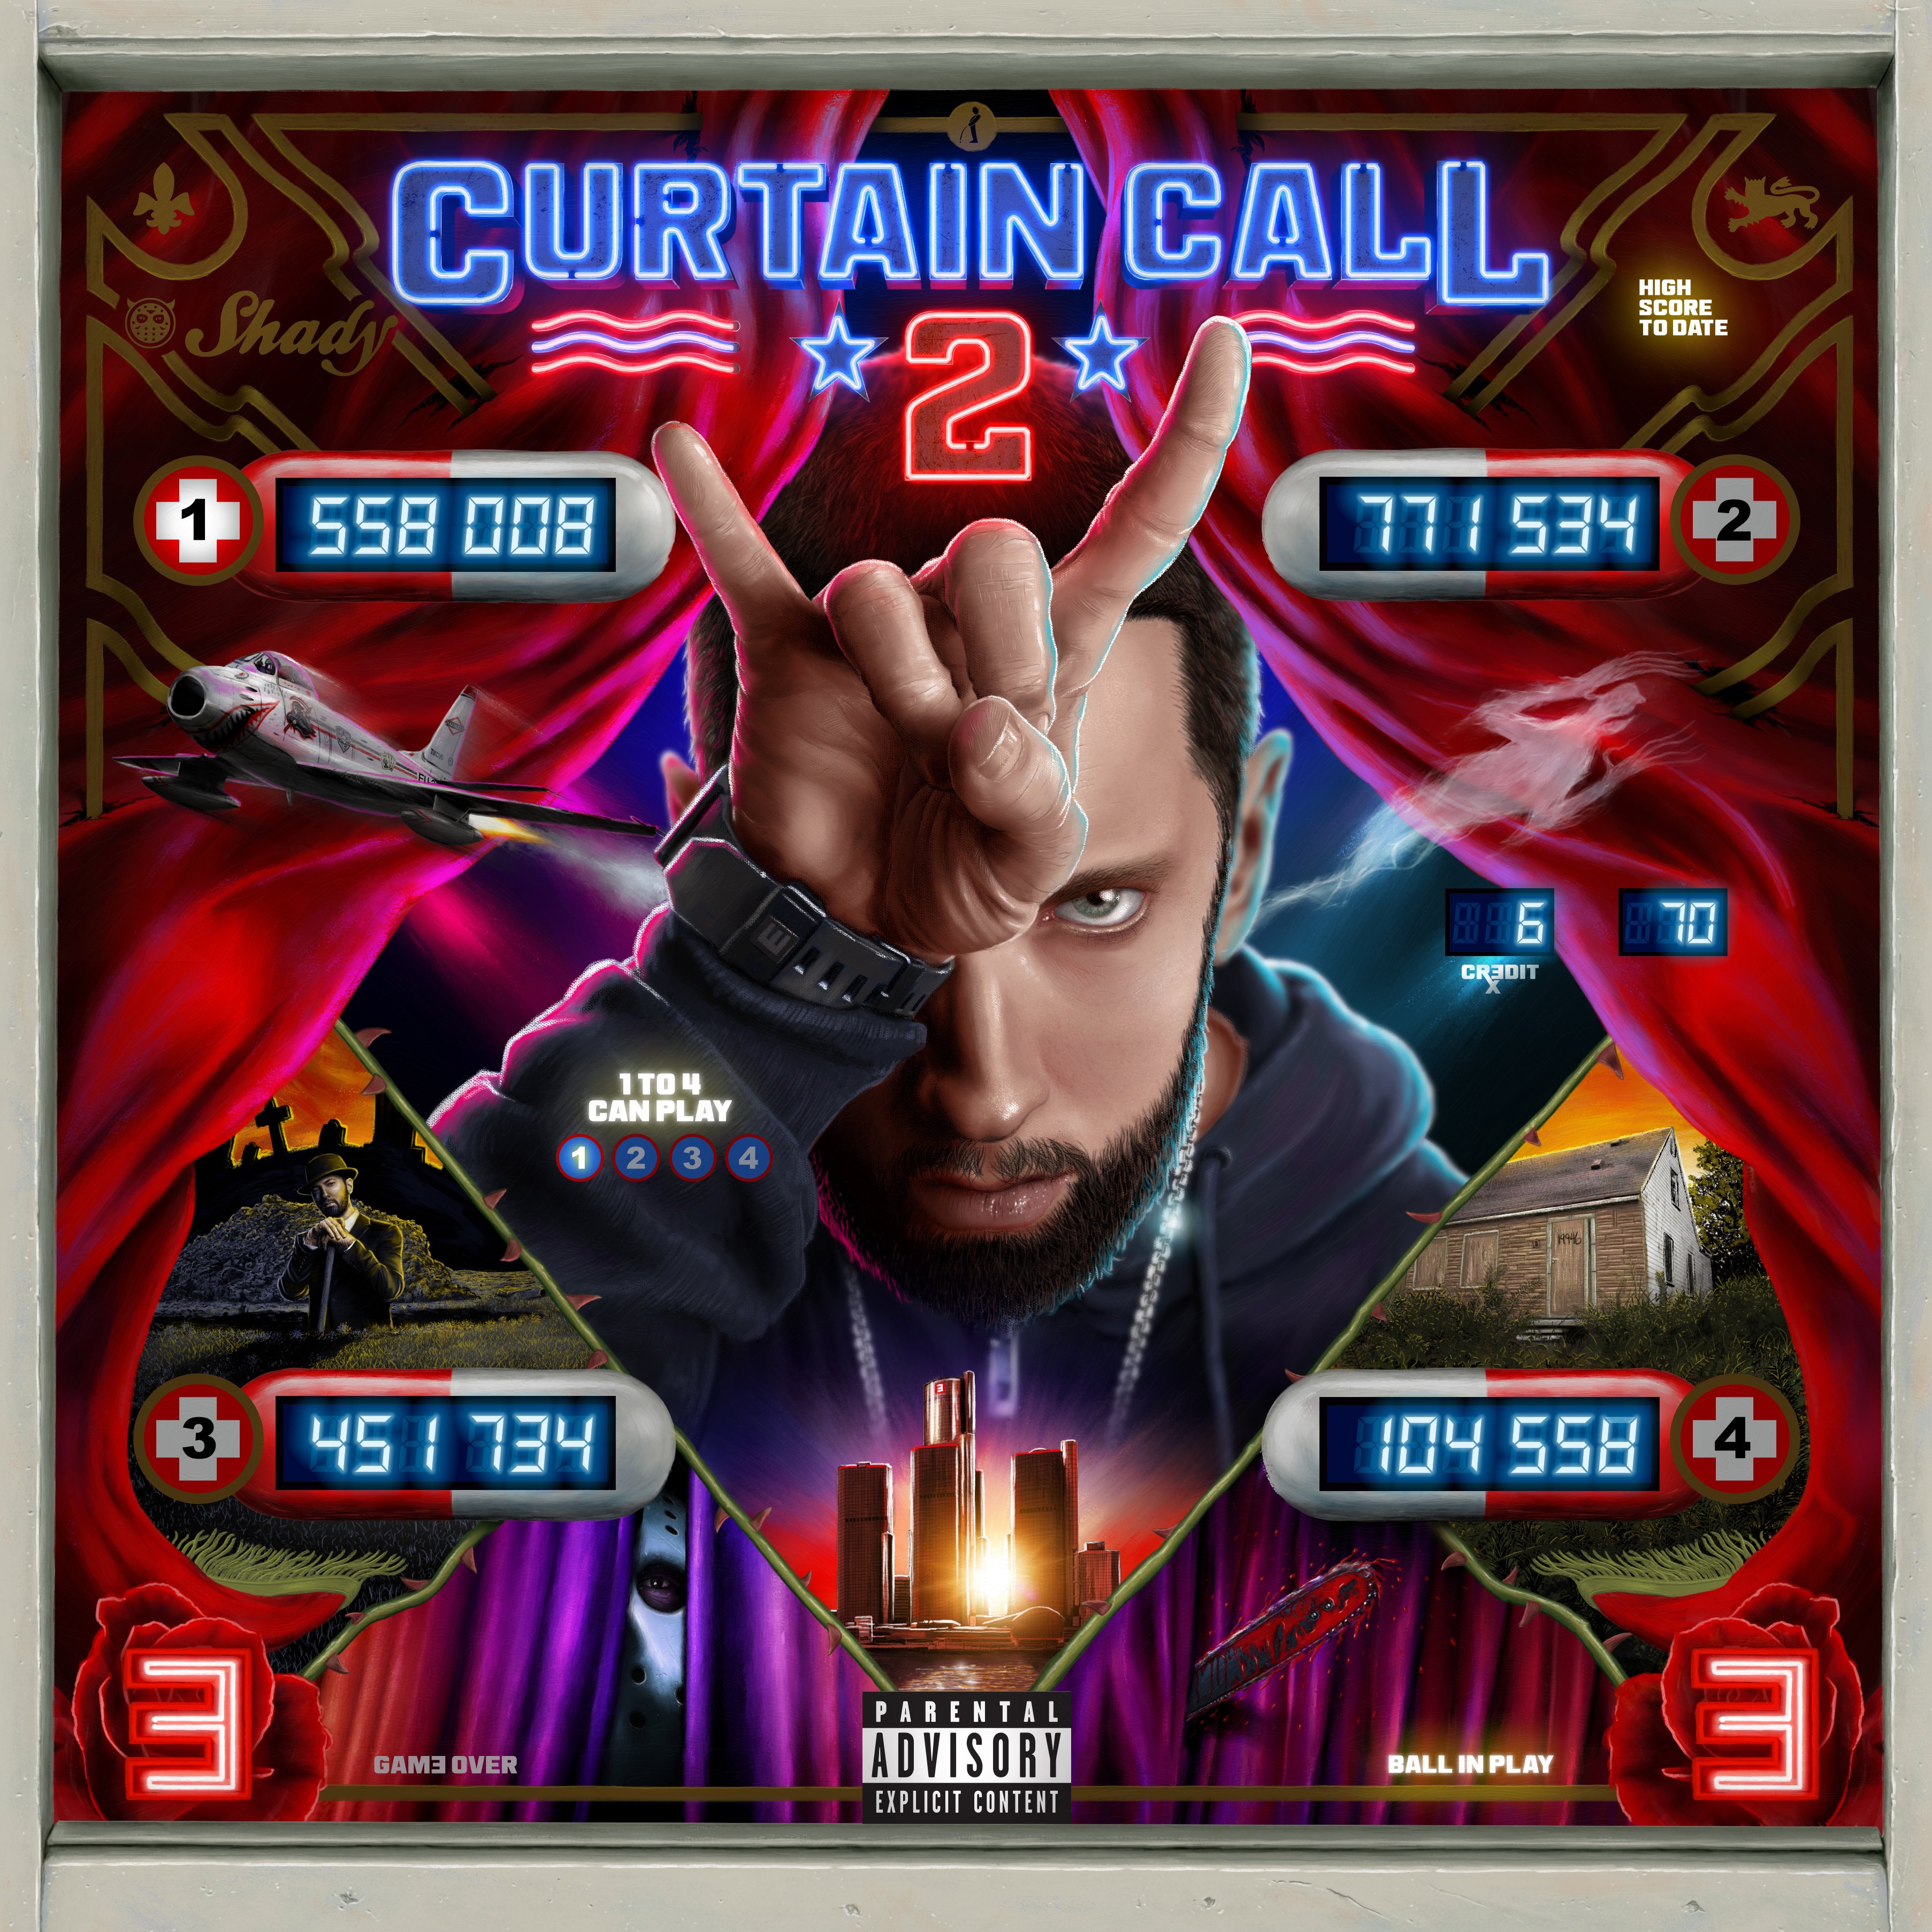 Album cover for 'Curtain Call 2' by Eminem (Image: twitter.com/eminem)